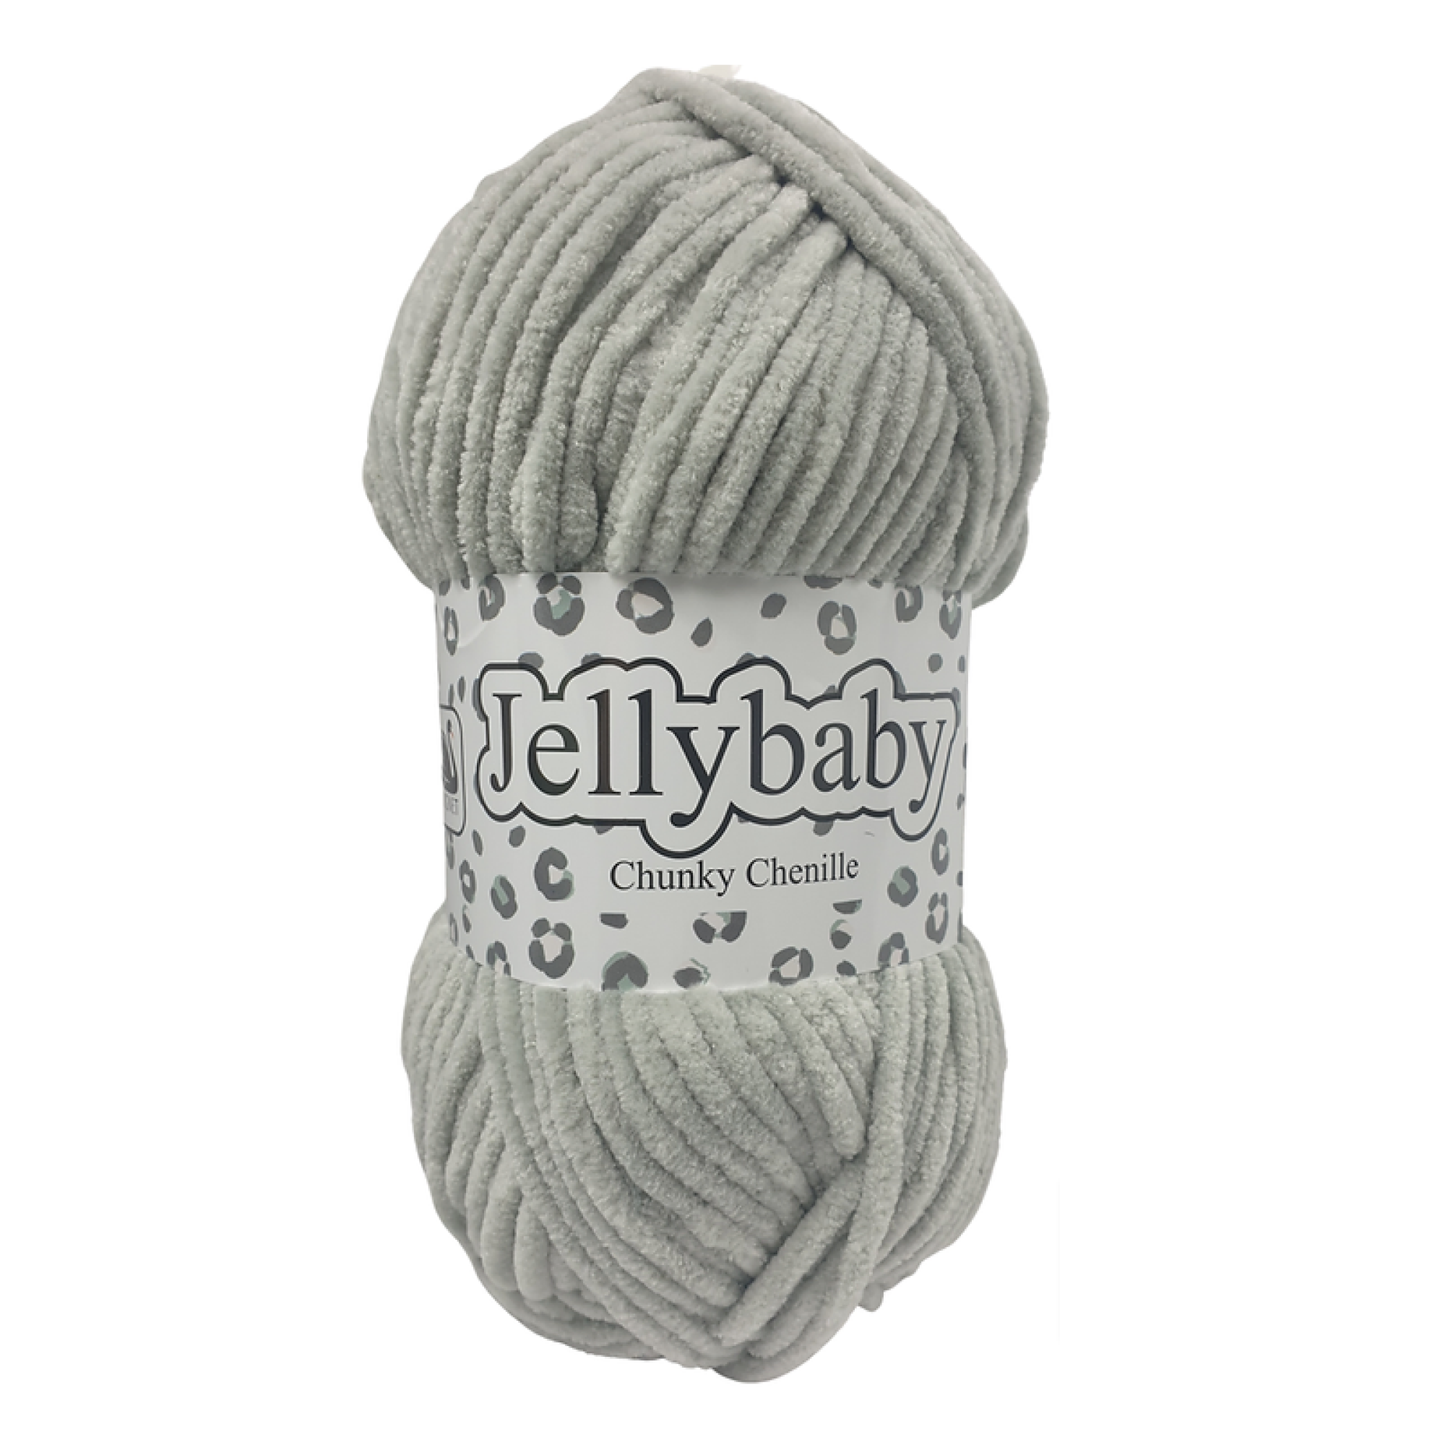 Cygnet Yarns - Jellybaby Chenille - Chunky - 100g Ball - 012 Pearl Grey